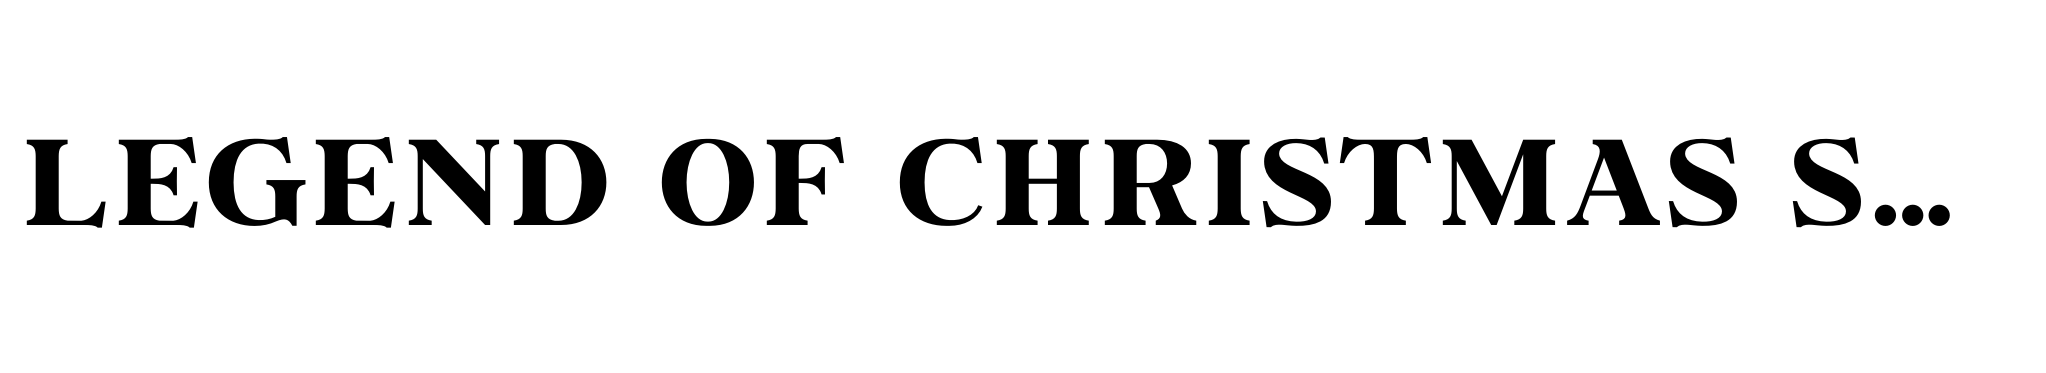 Legend Of Christmas Serif image